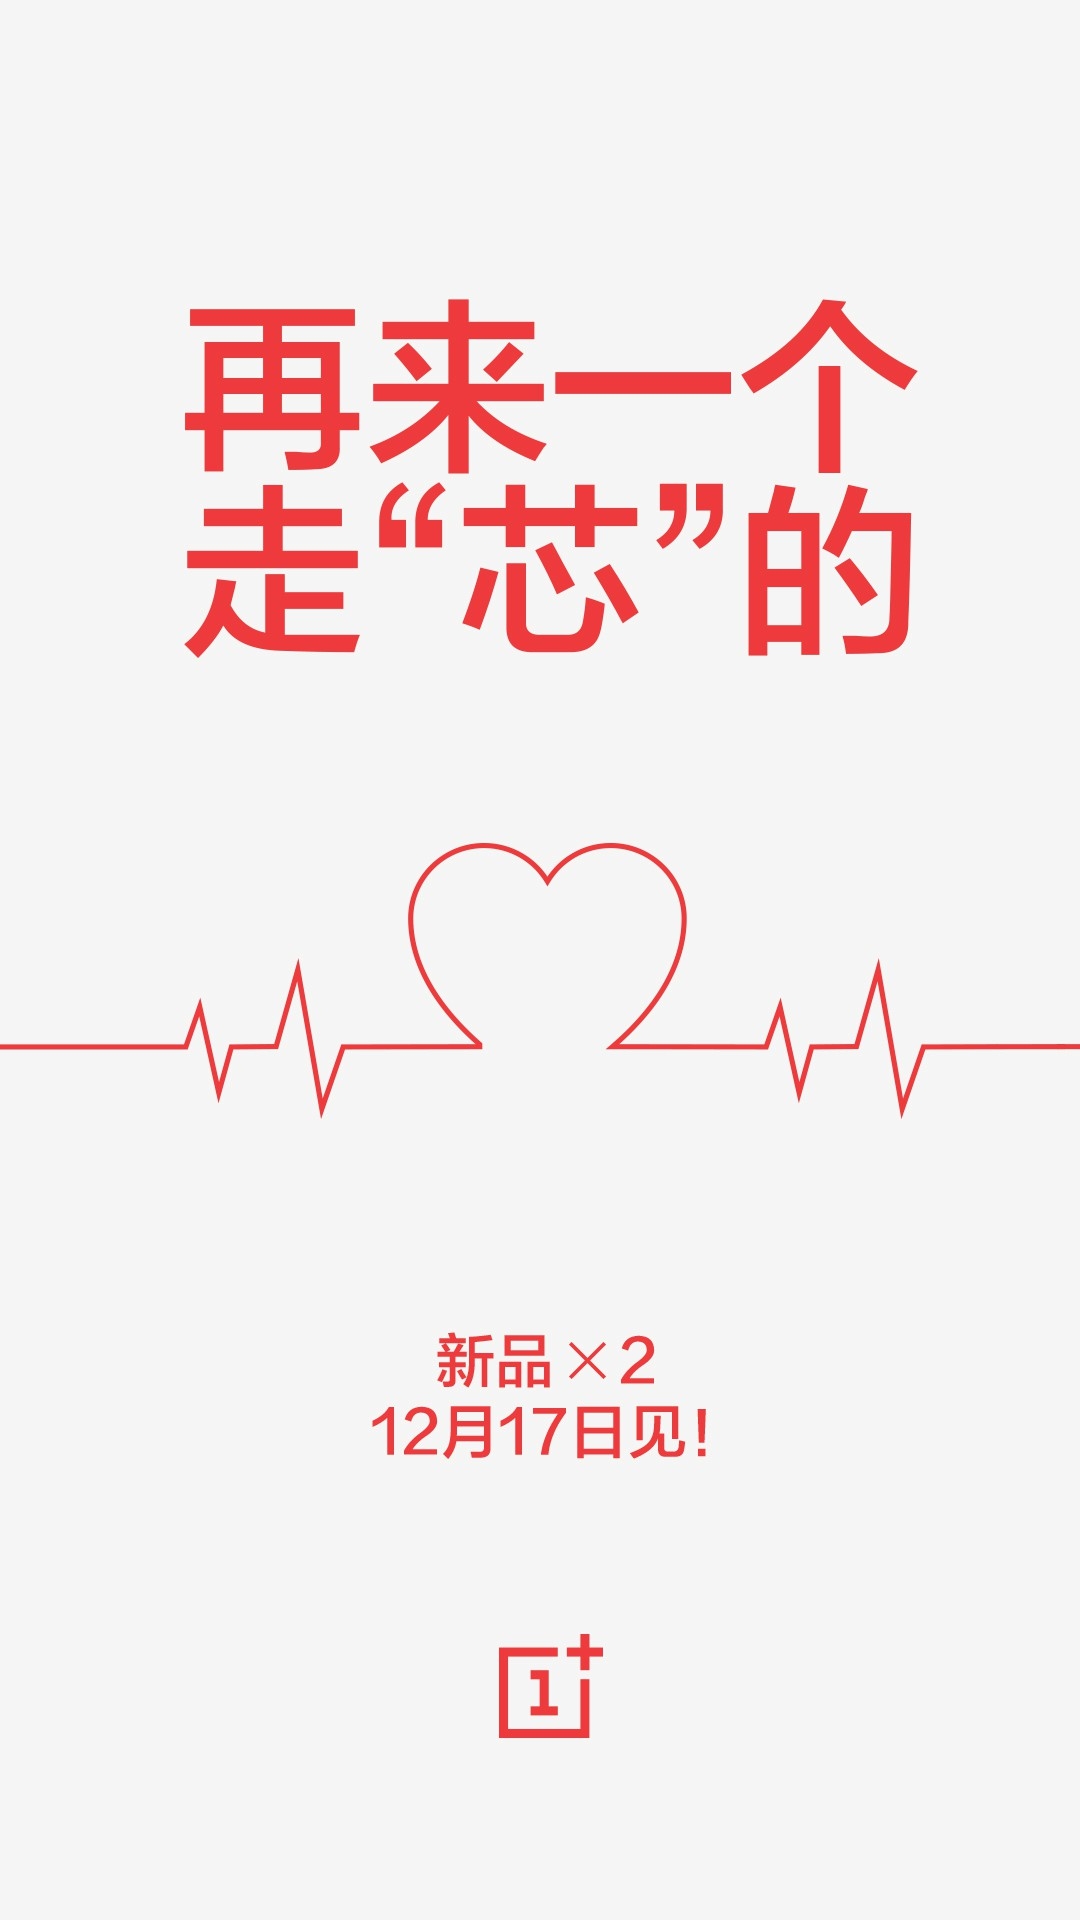 OnePlus teaser